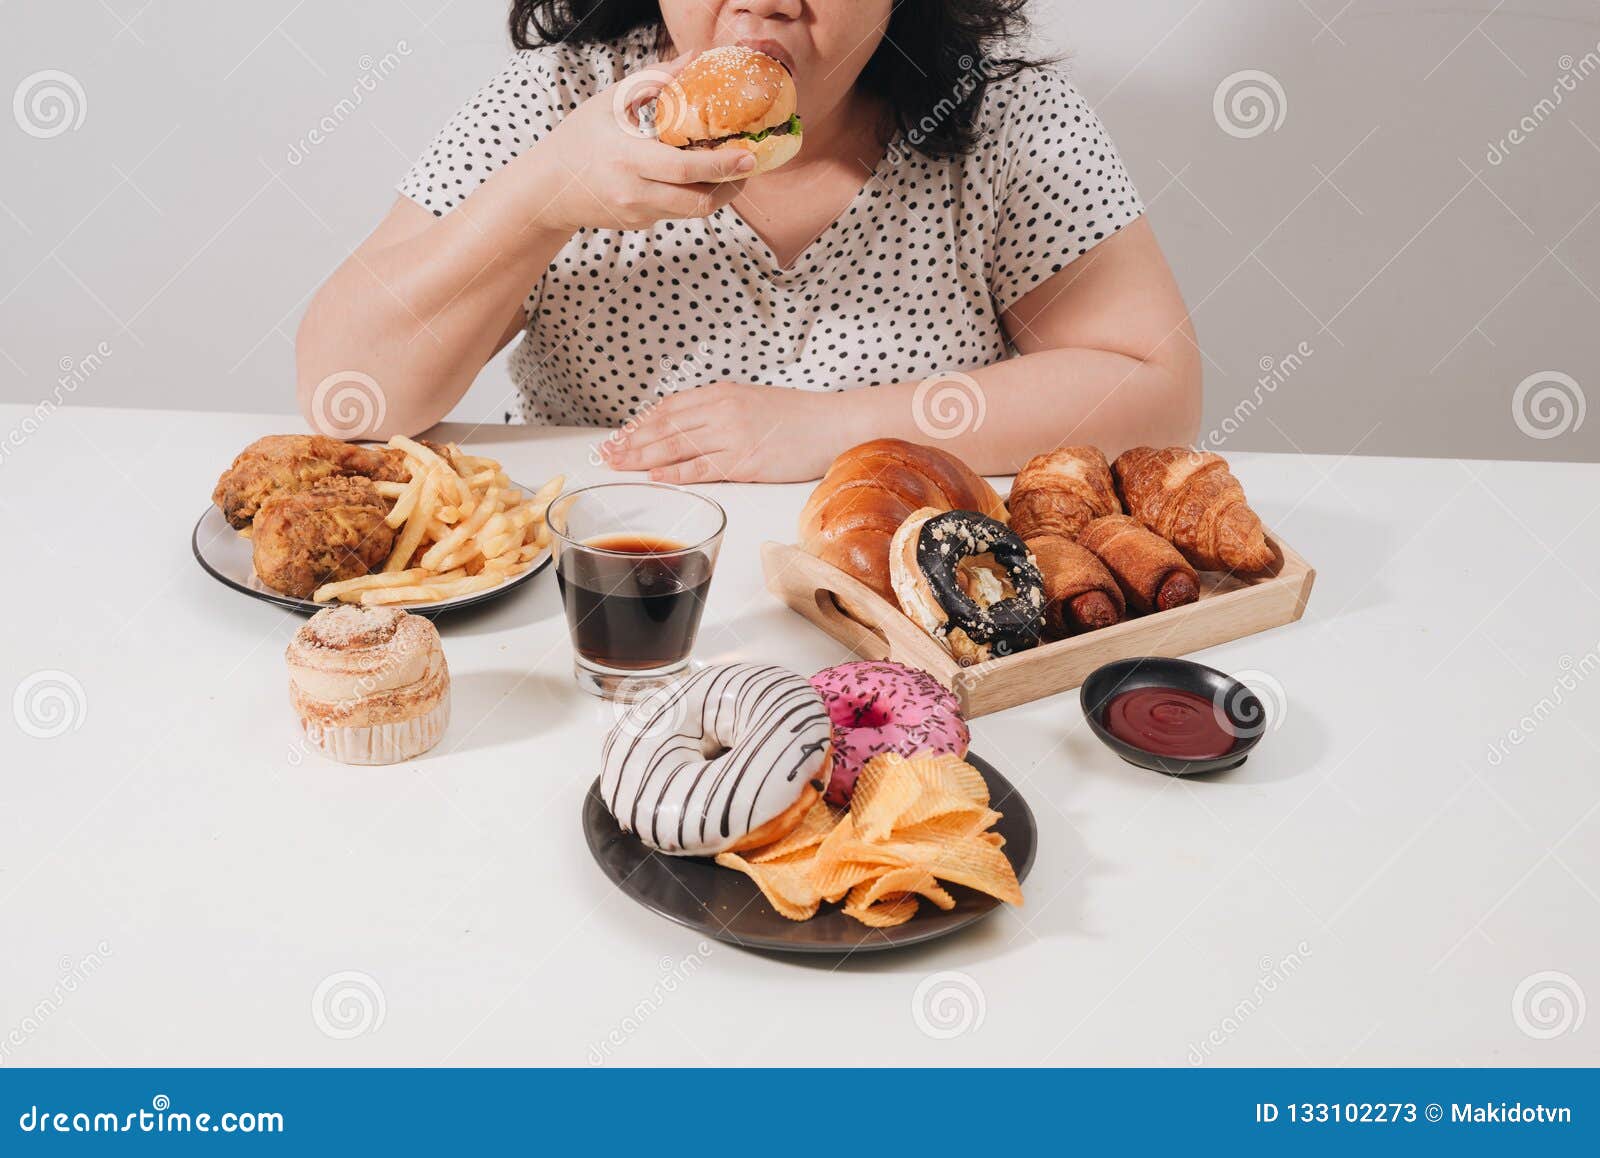 Curvy Female Preparing To Eat Hamburger, Overeating Problem, Depression  Stock Image - Image of food, nutrition: 133102273